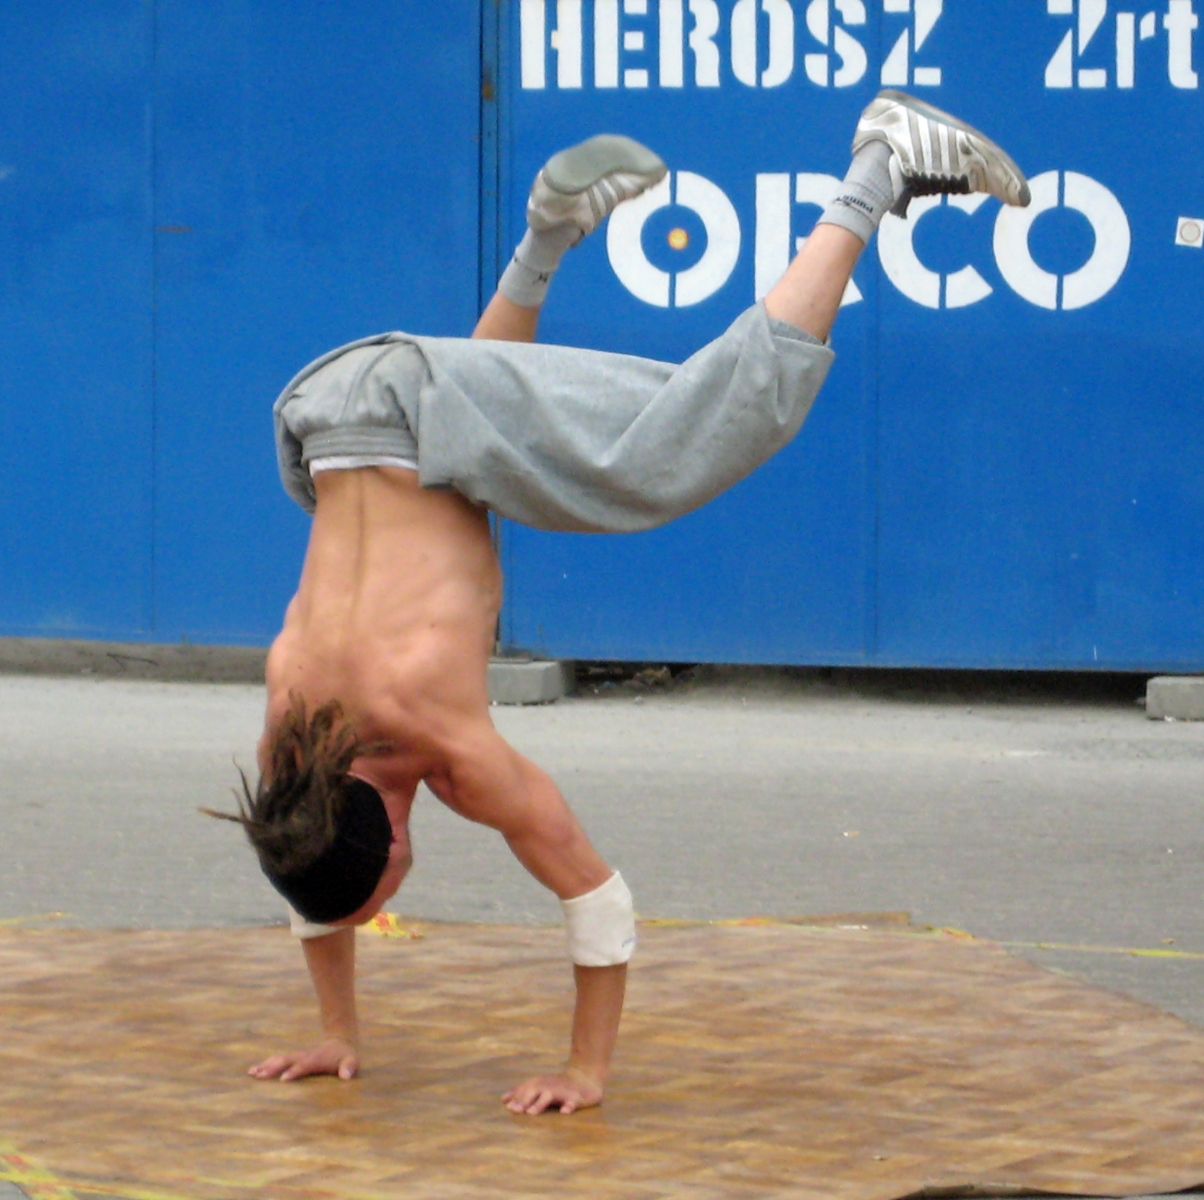 Guy break dancing, Budapest, Hungary